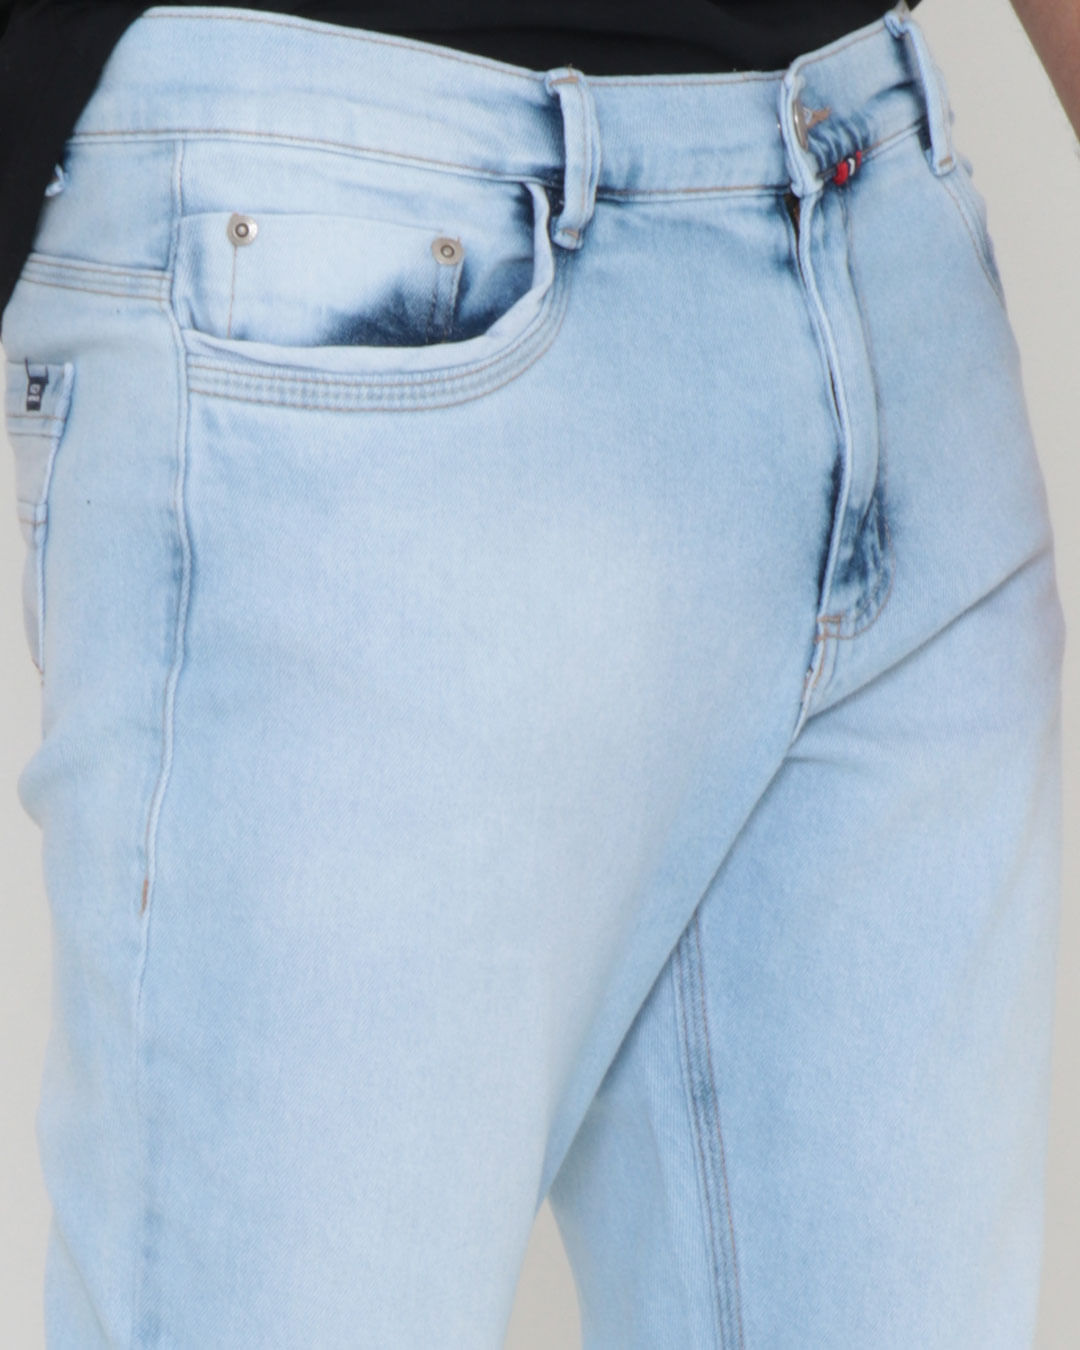 Calca-Jeans-Masculina-Slim-Azul-Claro